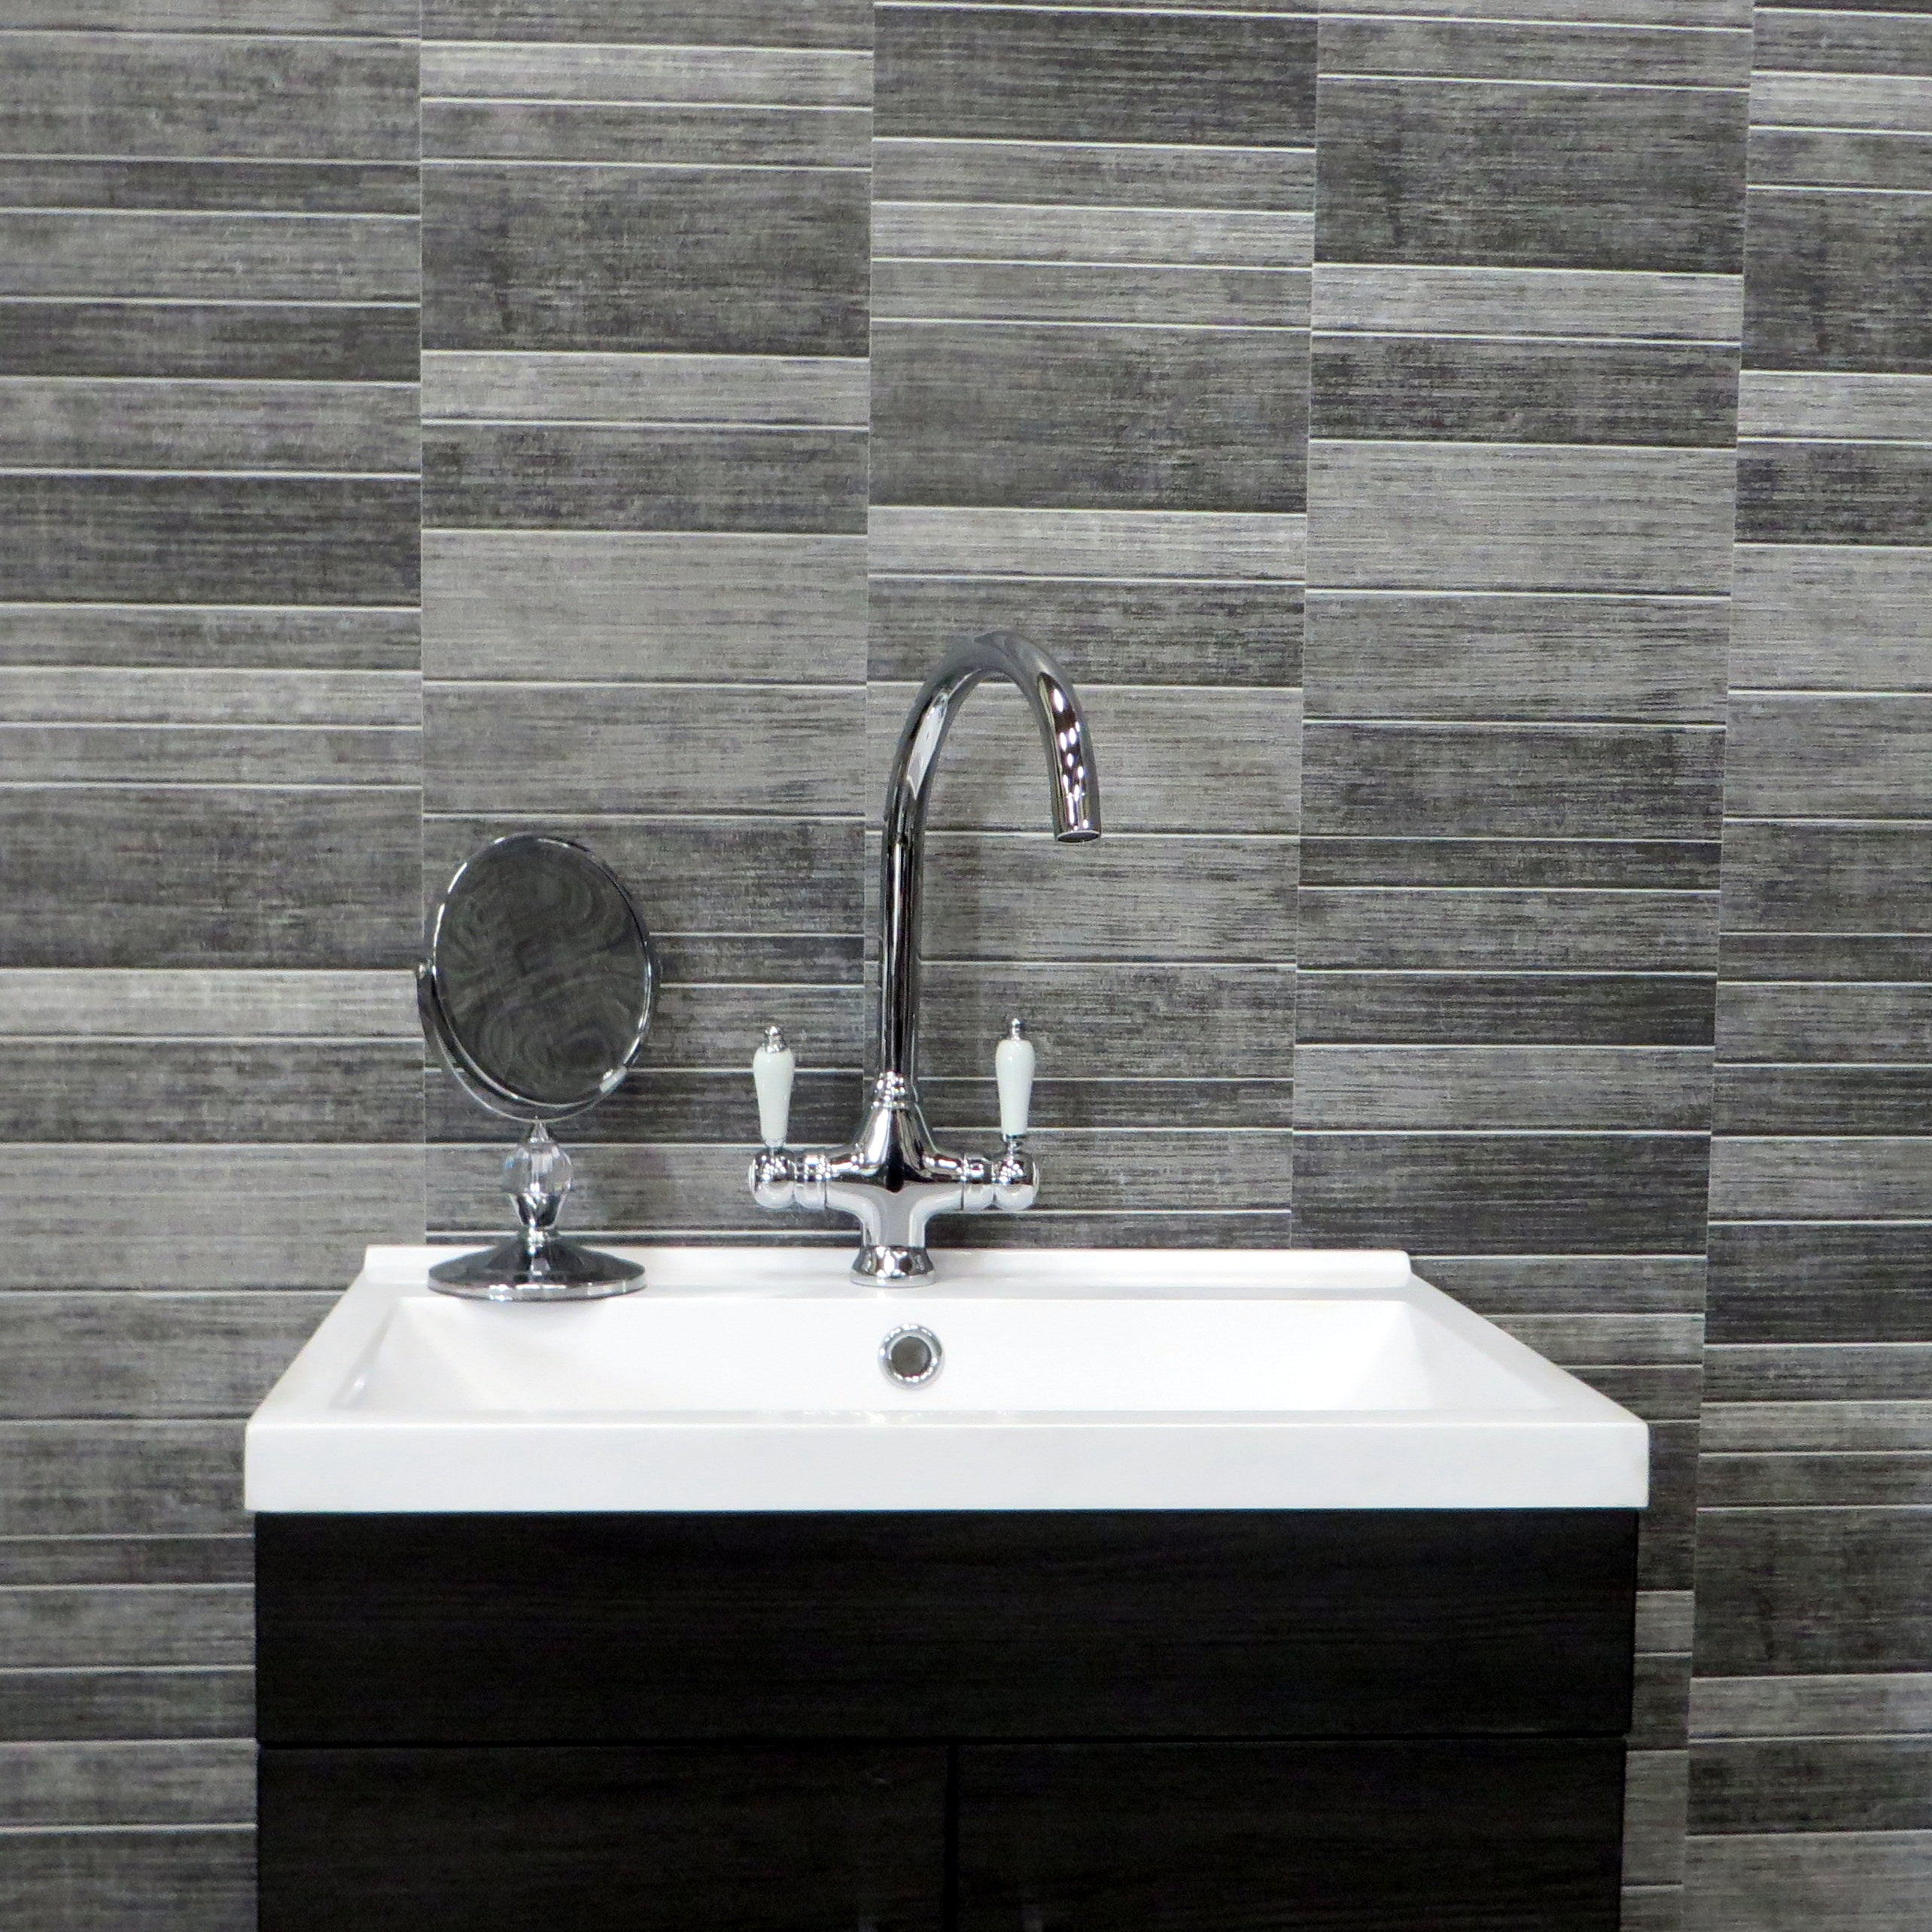 Sample of Dark Grey Small Tile 5mm Bathroom Cladding Wet Wall Panels